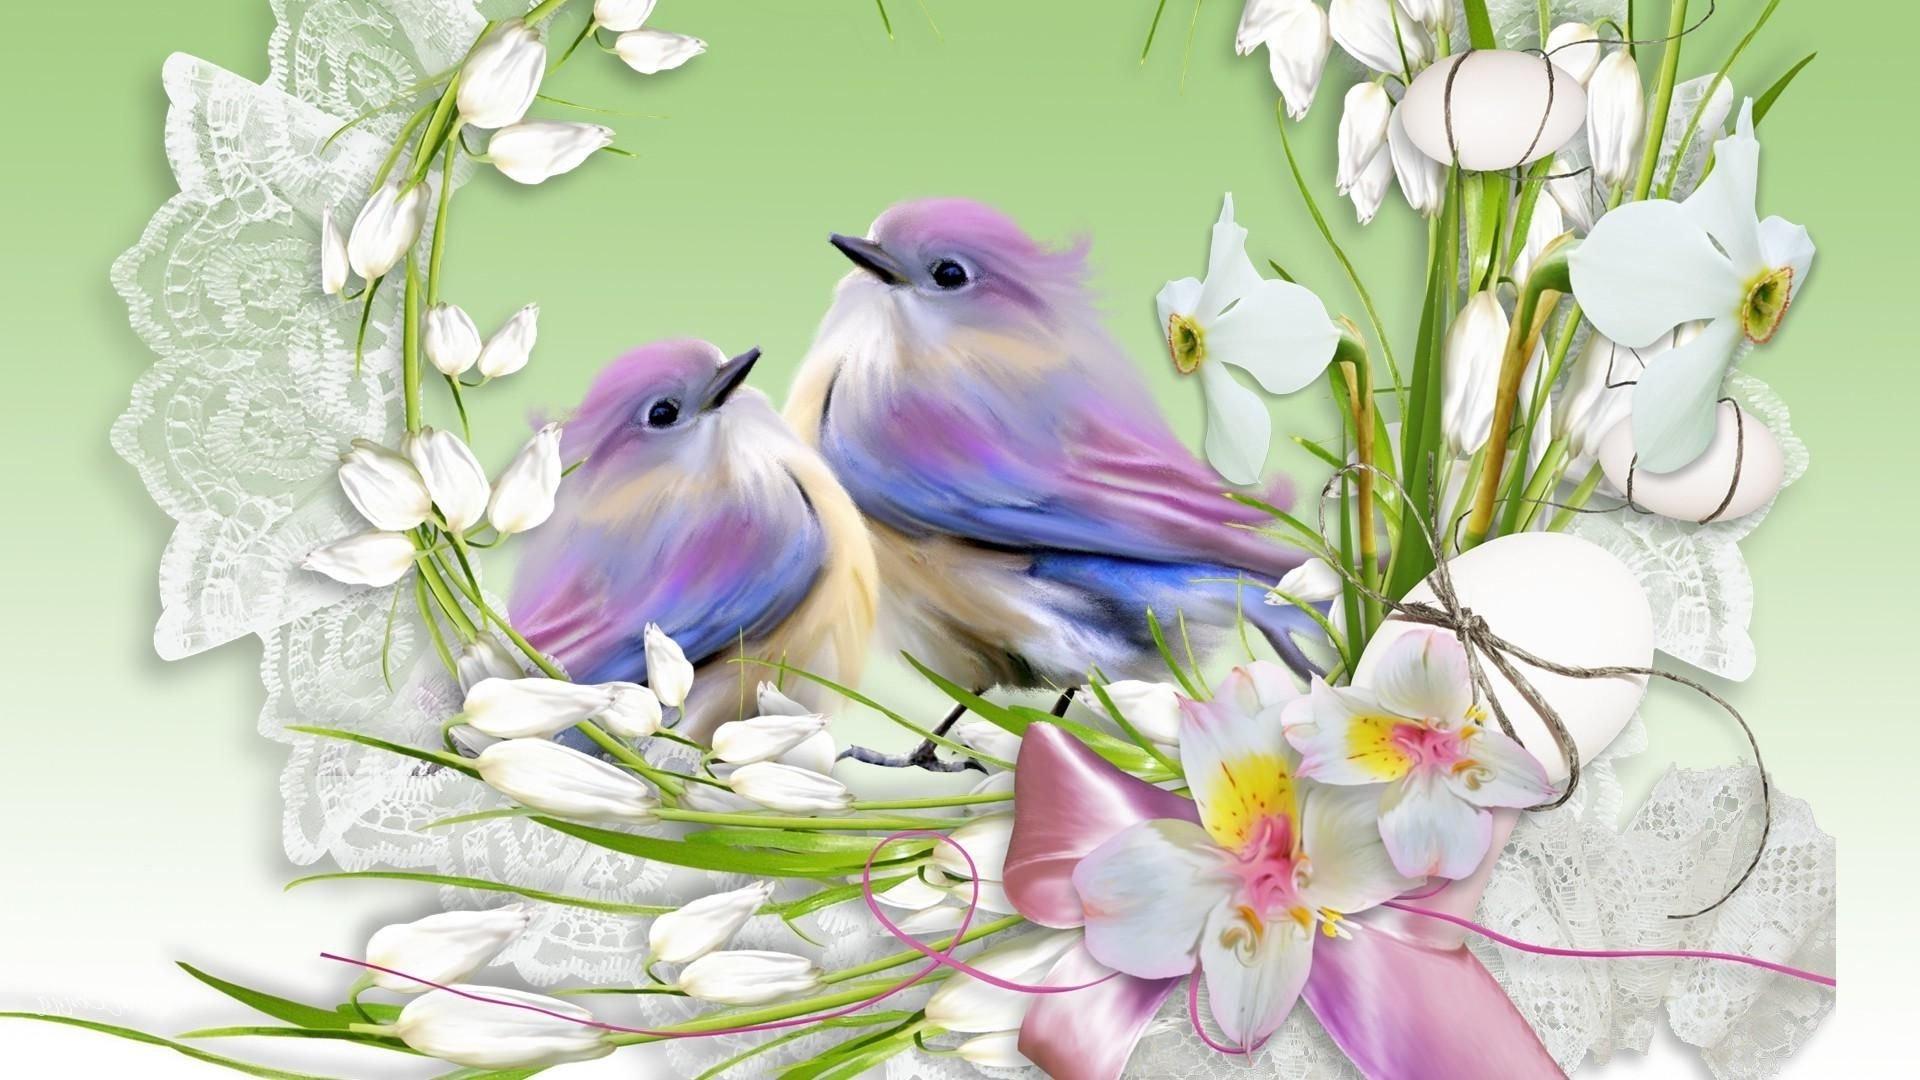 Pretty Birds in Nest HD Wallpaper. Background Image